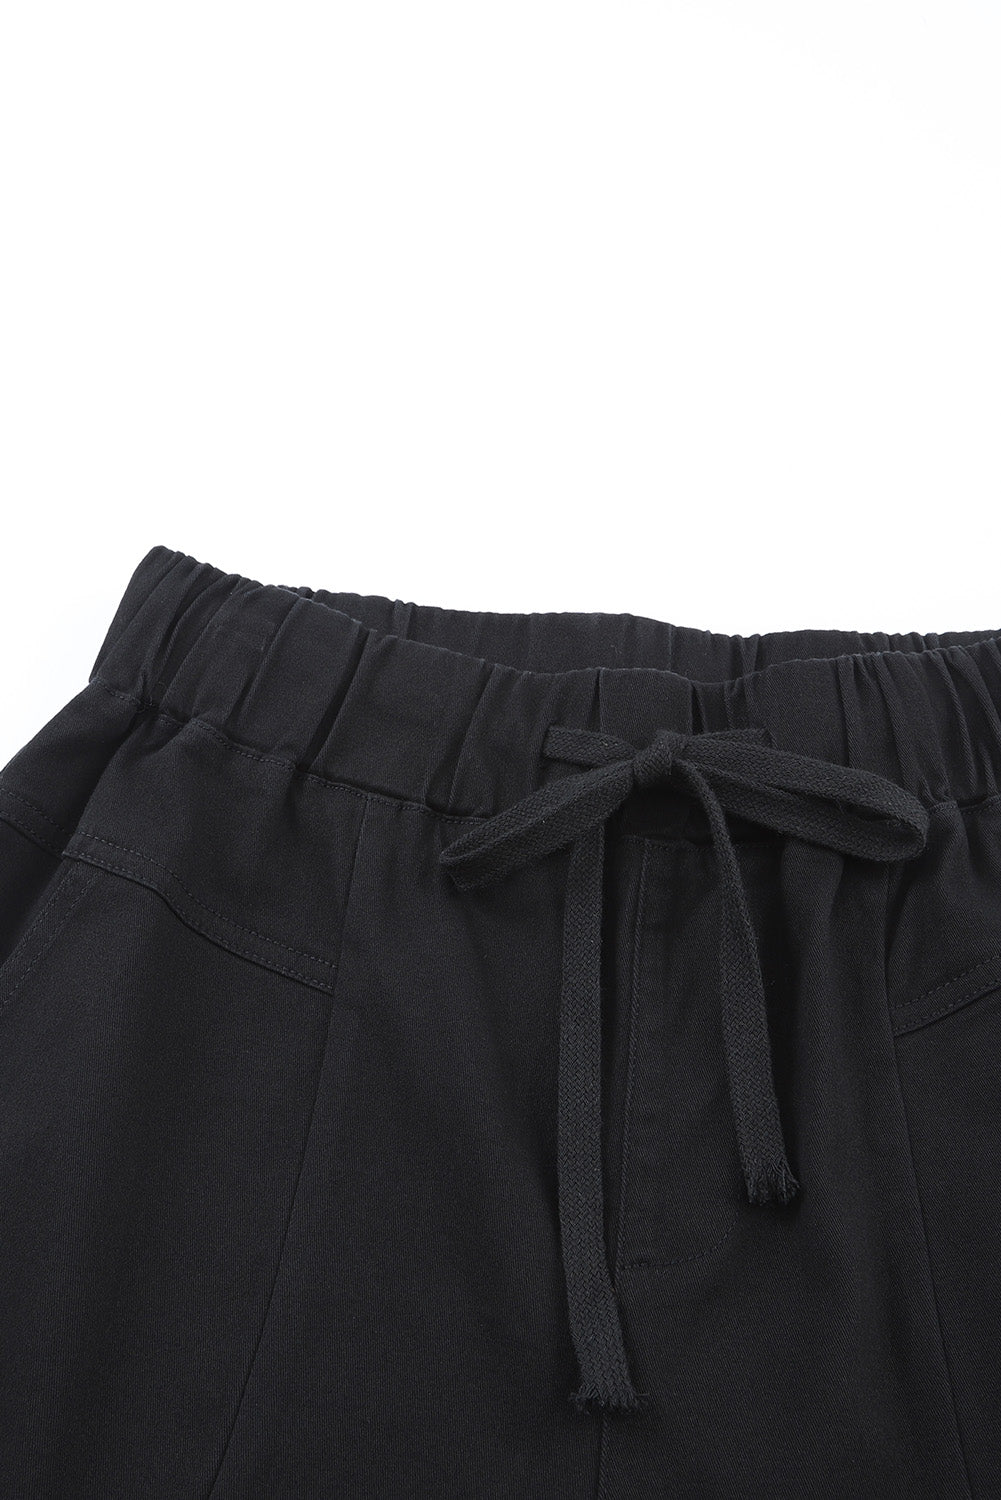 Black High Waist Drawstring Pocketed Pants